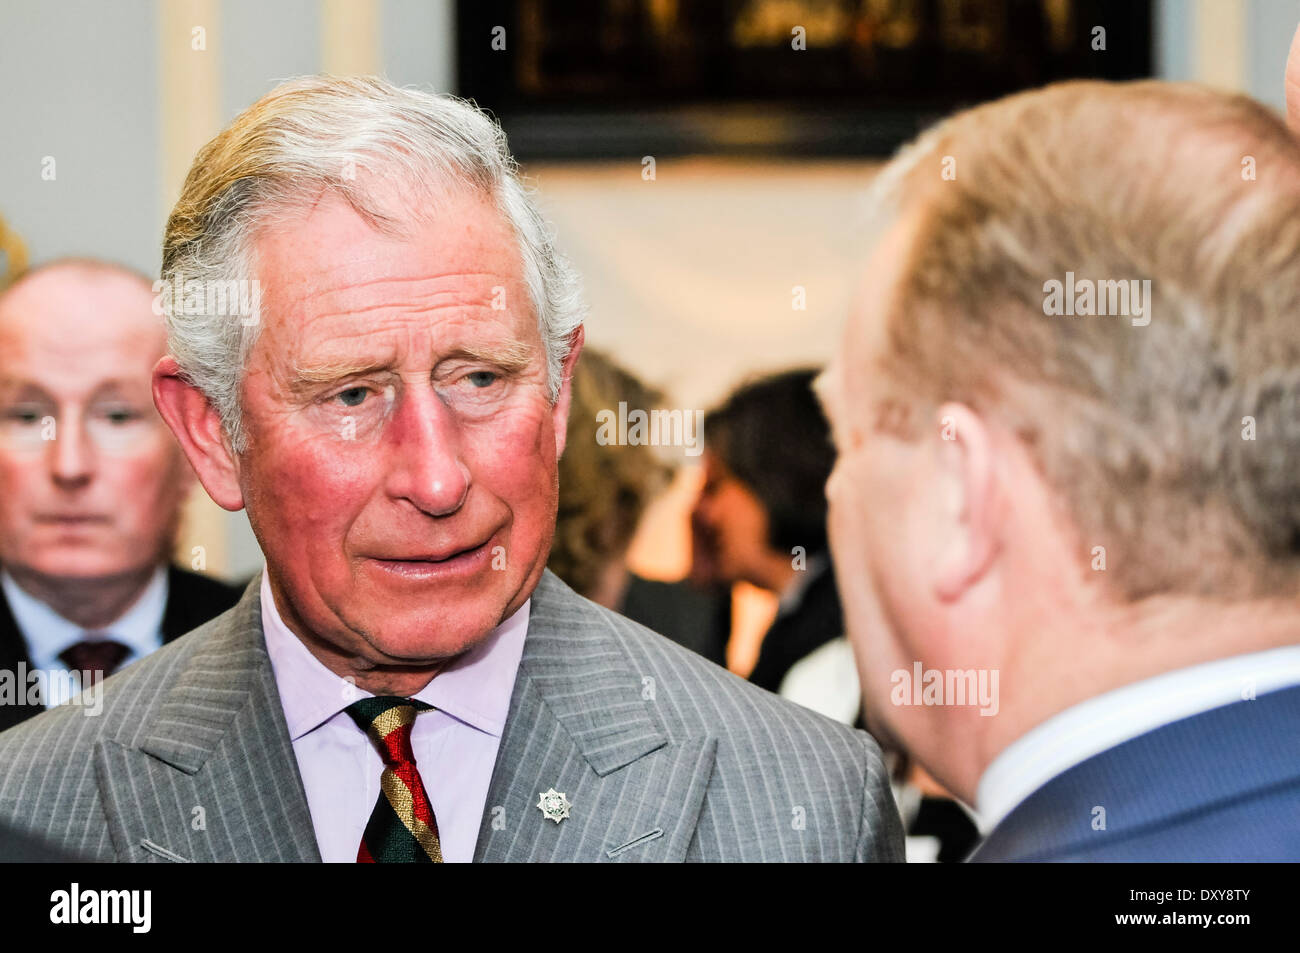 Hillsborough, Northern Ireland. 1 Apr 2014 - Prince Charles, the Prince of Wales, meets with Northern Ireland Tourist Board members at Hillsborough Castle Credit:  Stephen Barnes/Alamy Live News Stock Photo